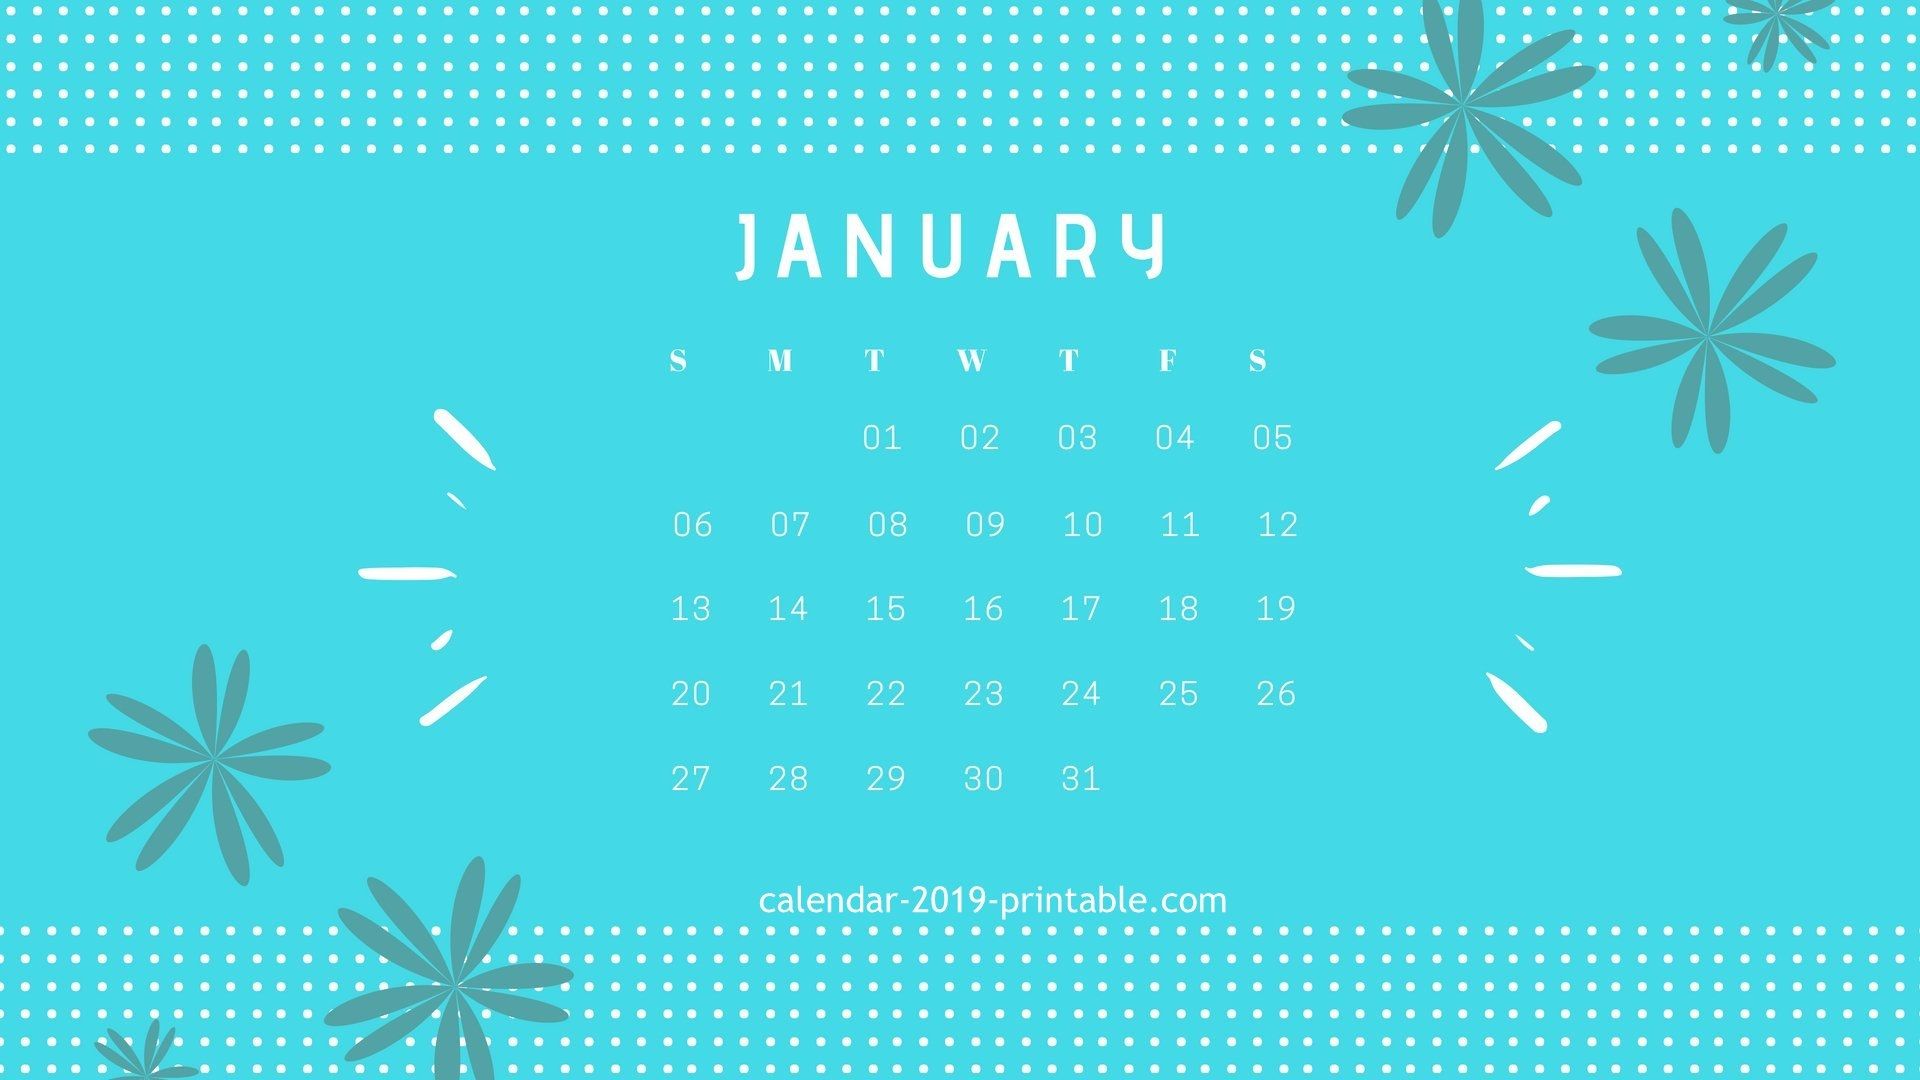 Calendar 2019 Hd Images Desktop